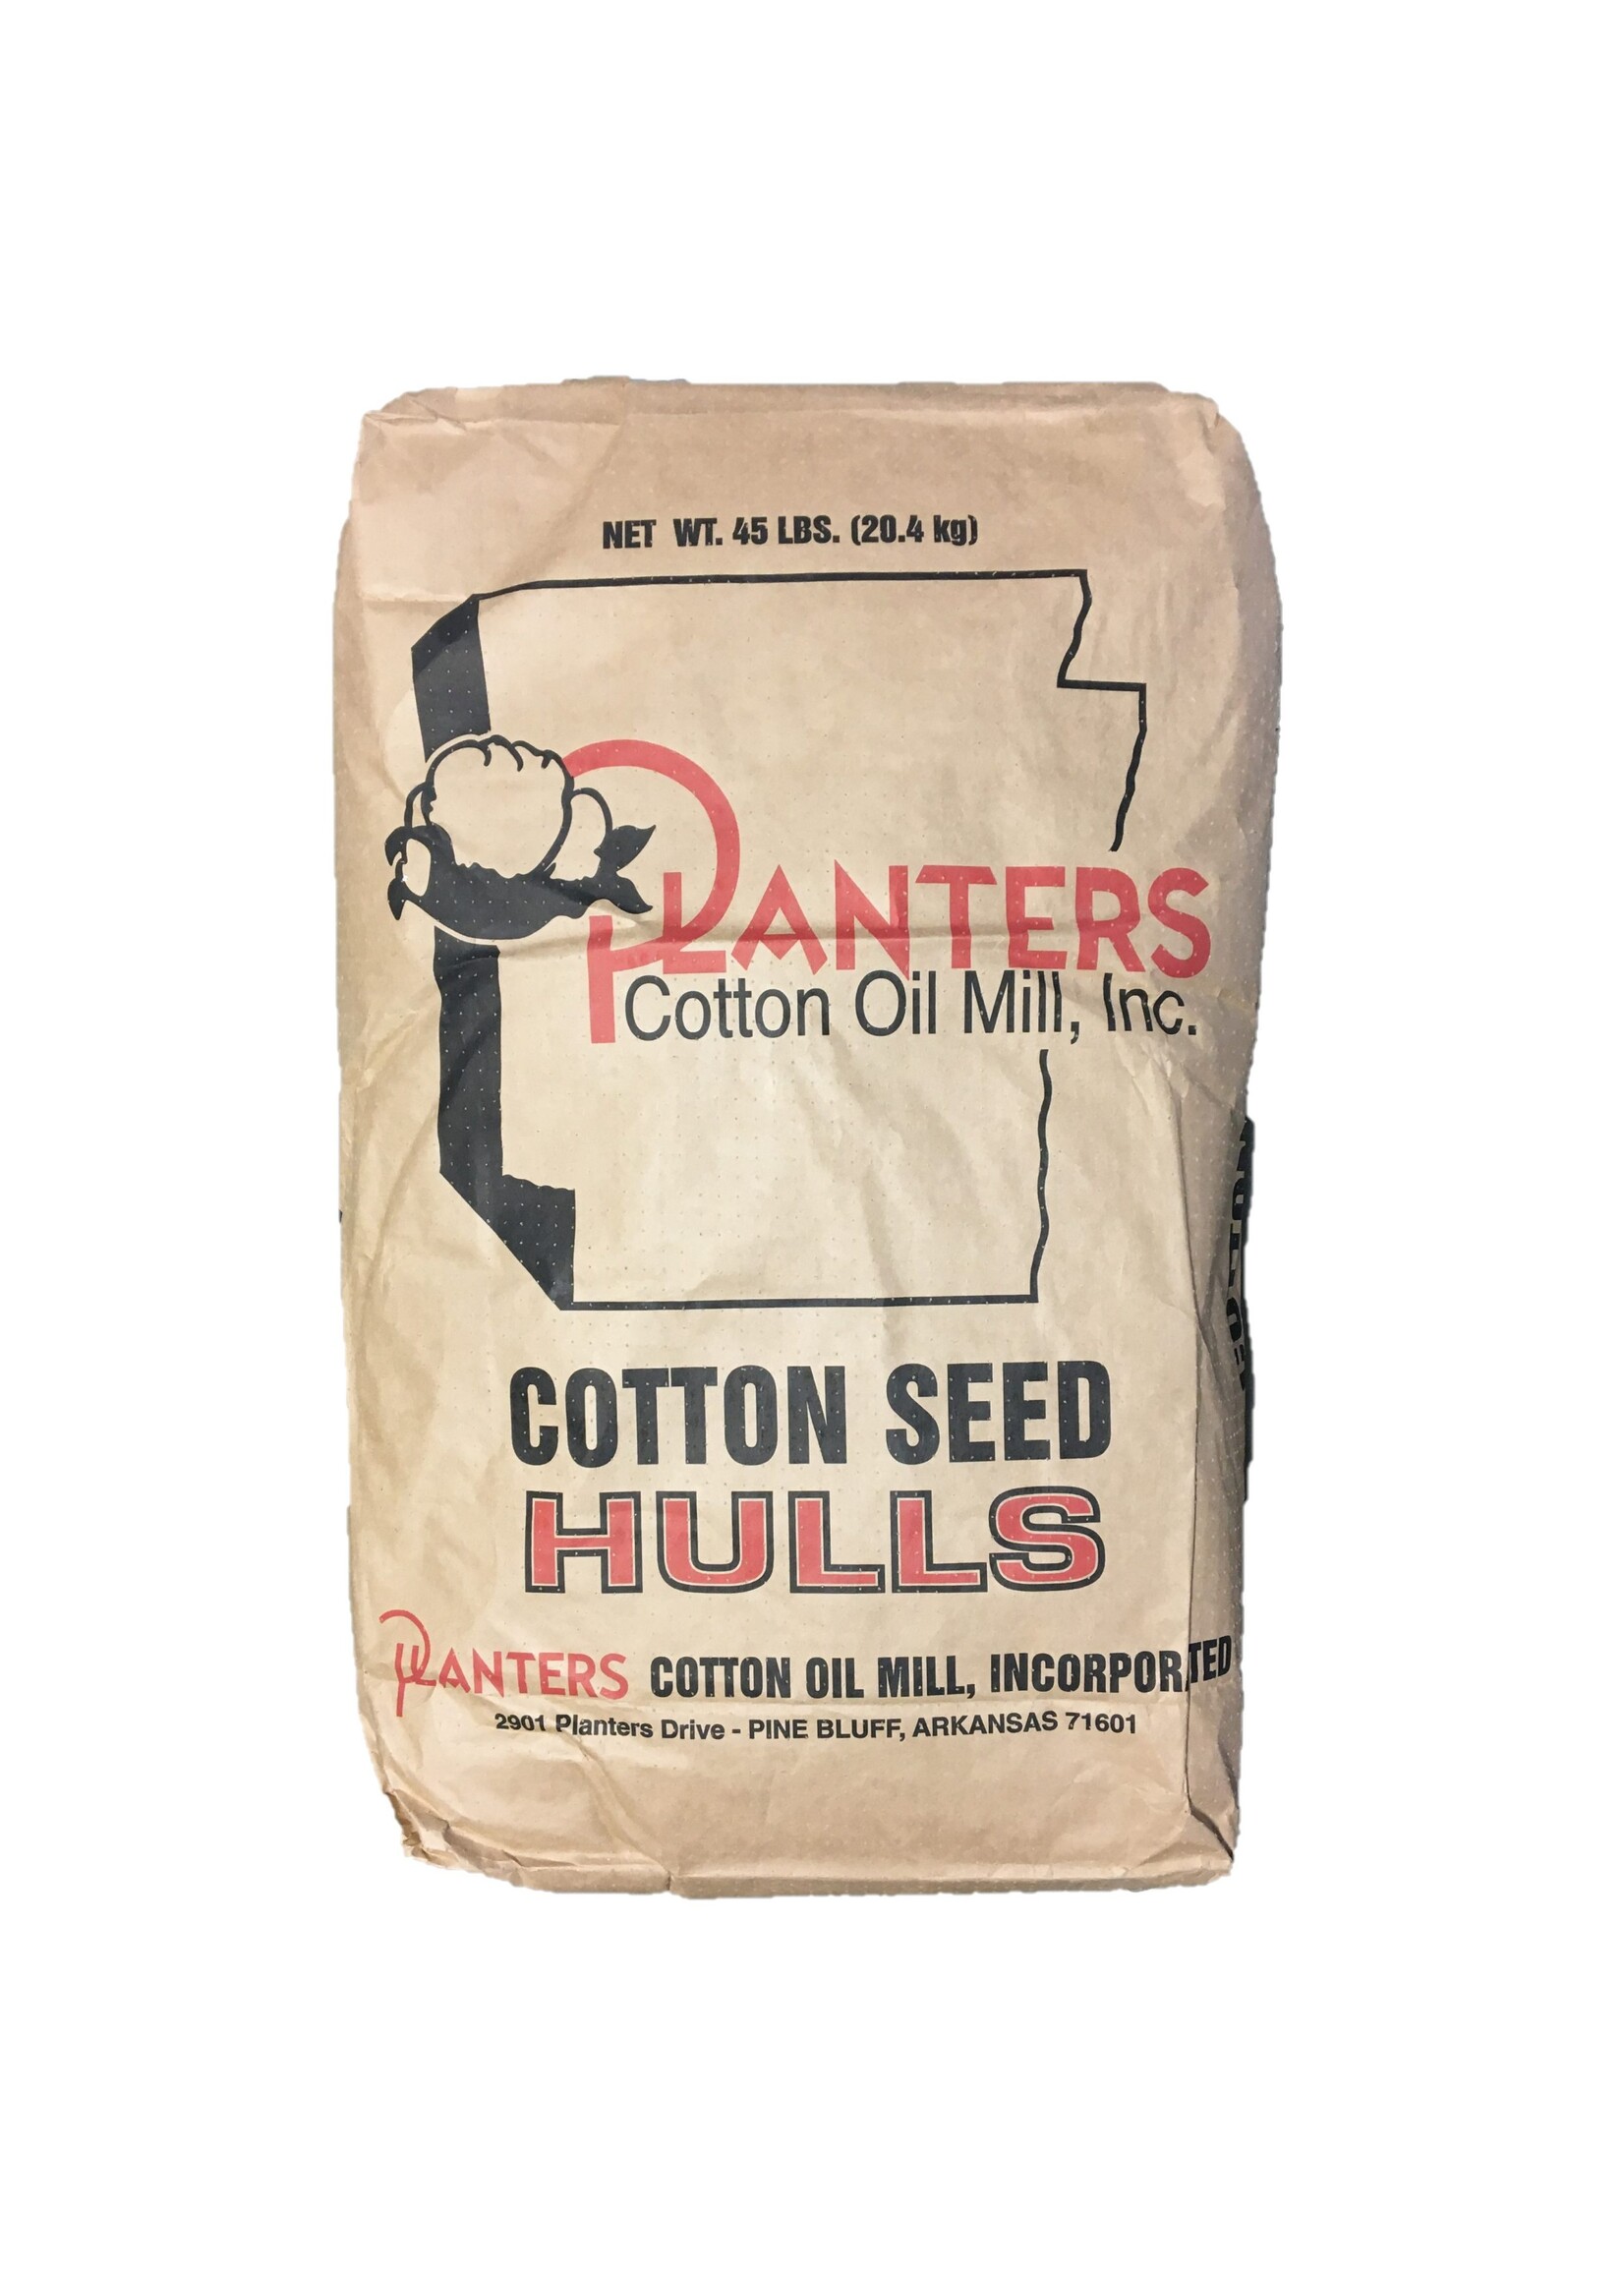 Planters Cotton Oil Mill Planters Cotton Oil Mill Sacked Cottonseed Hulls